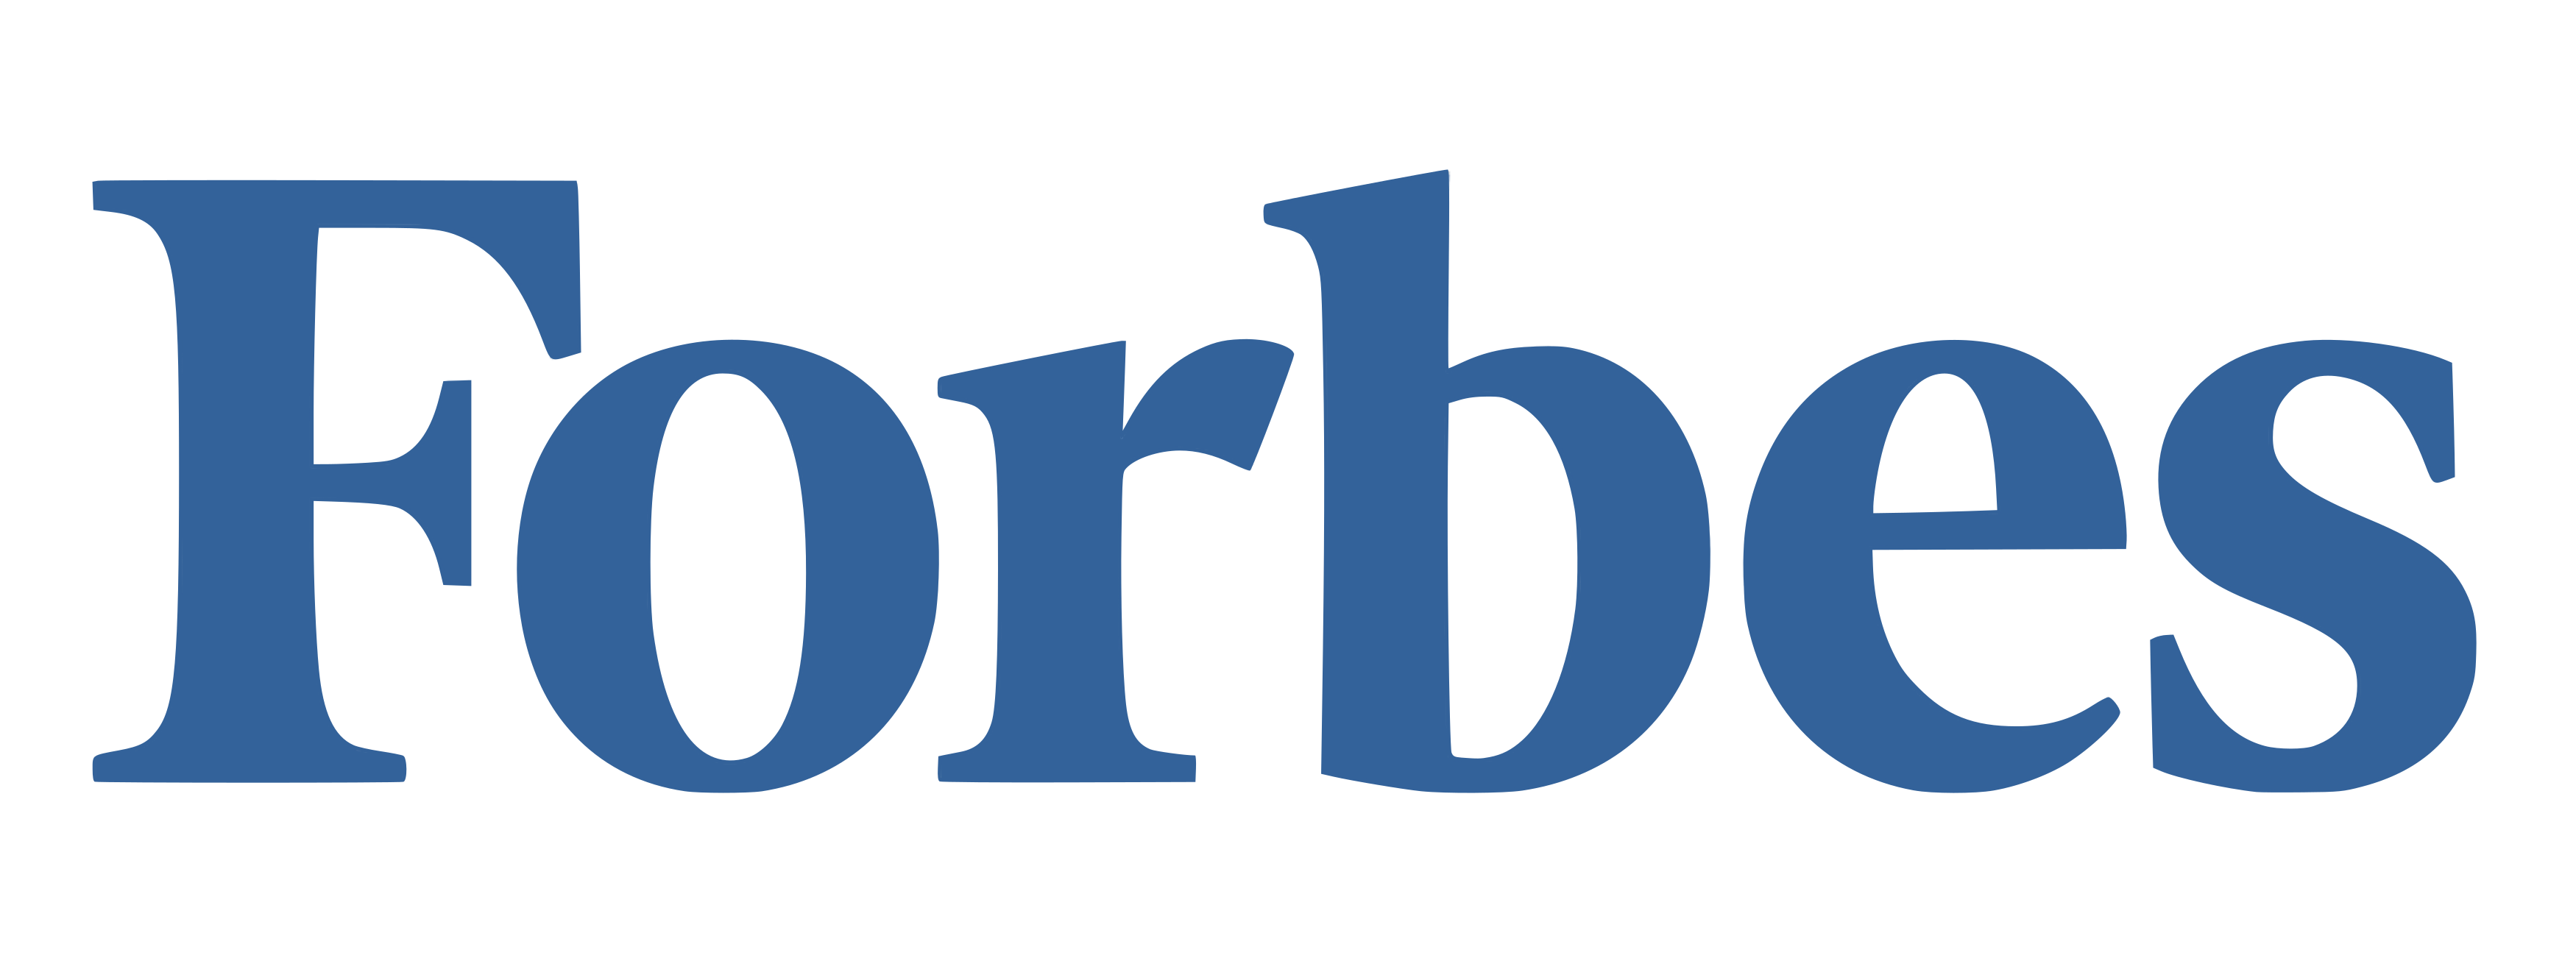 Forbes Logo Transparent Png -